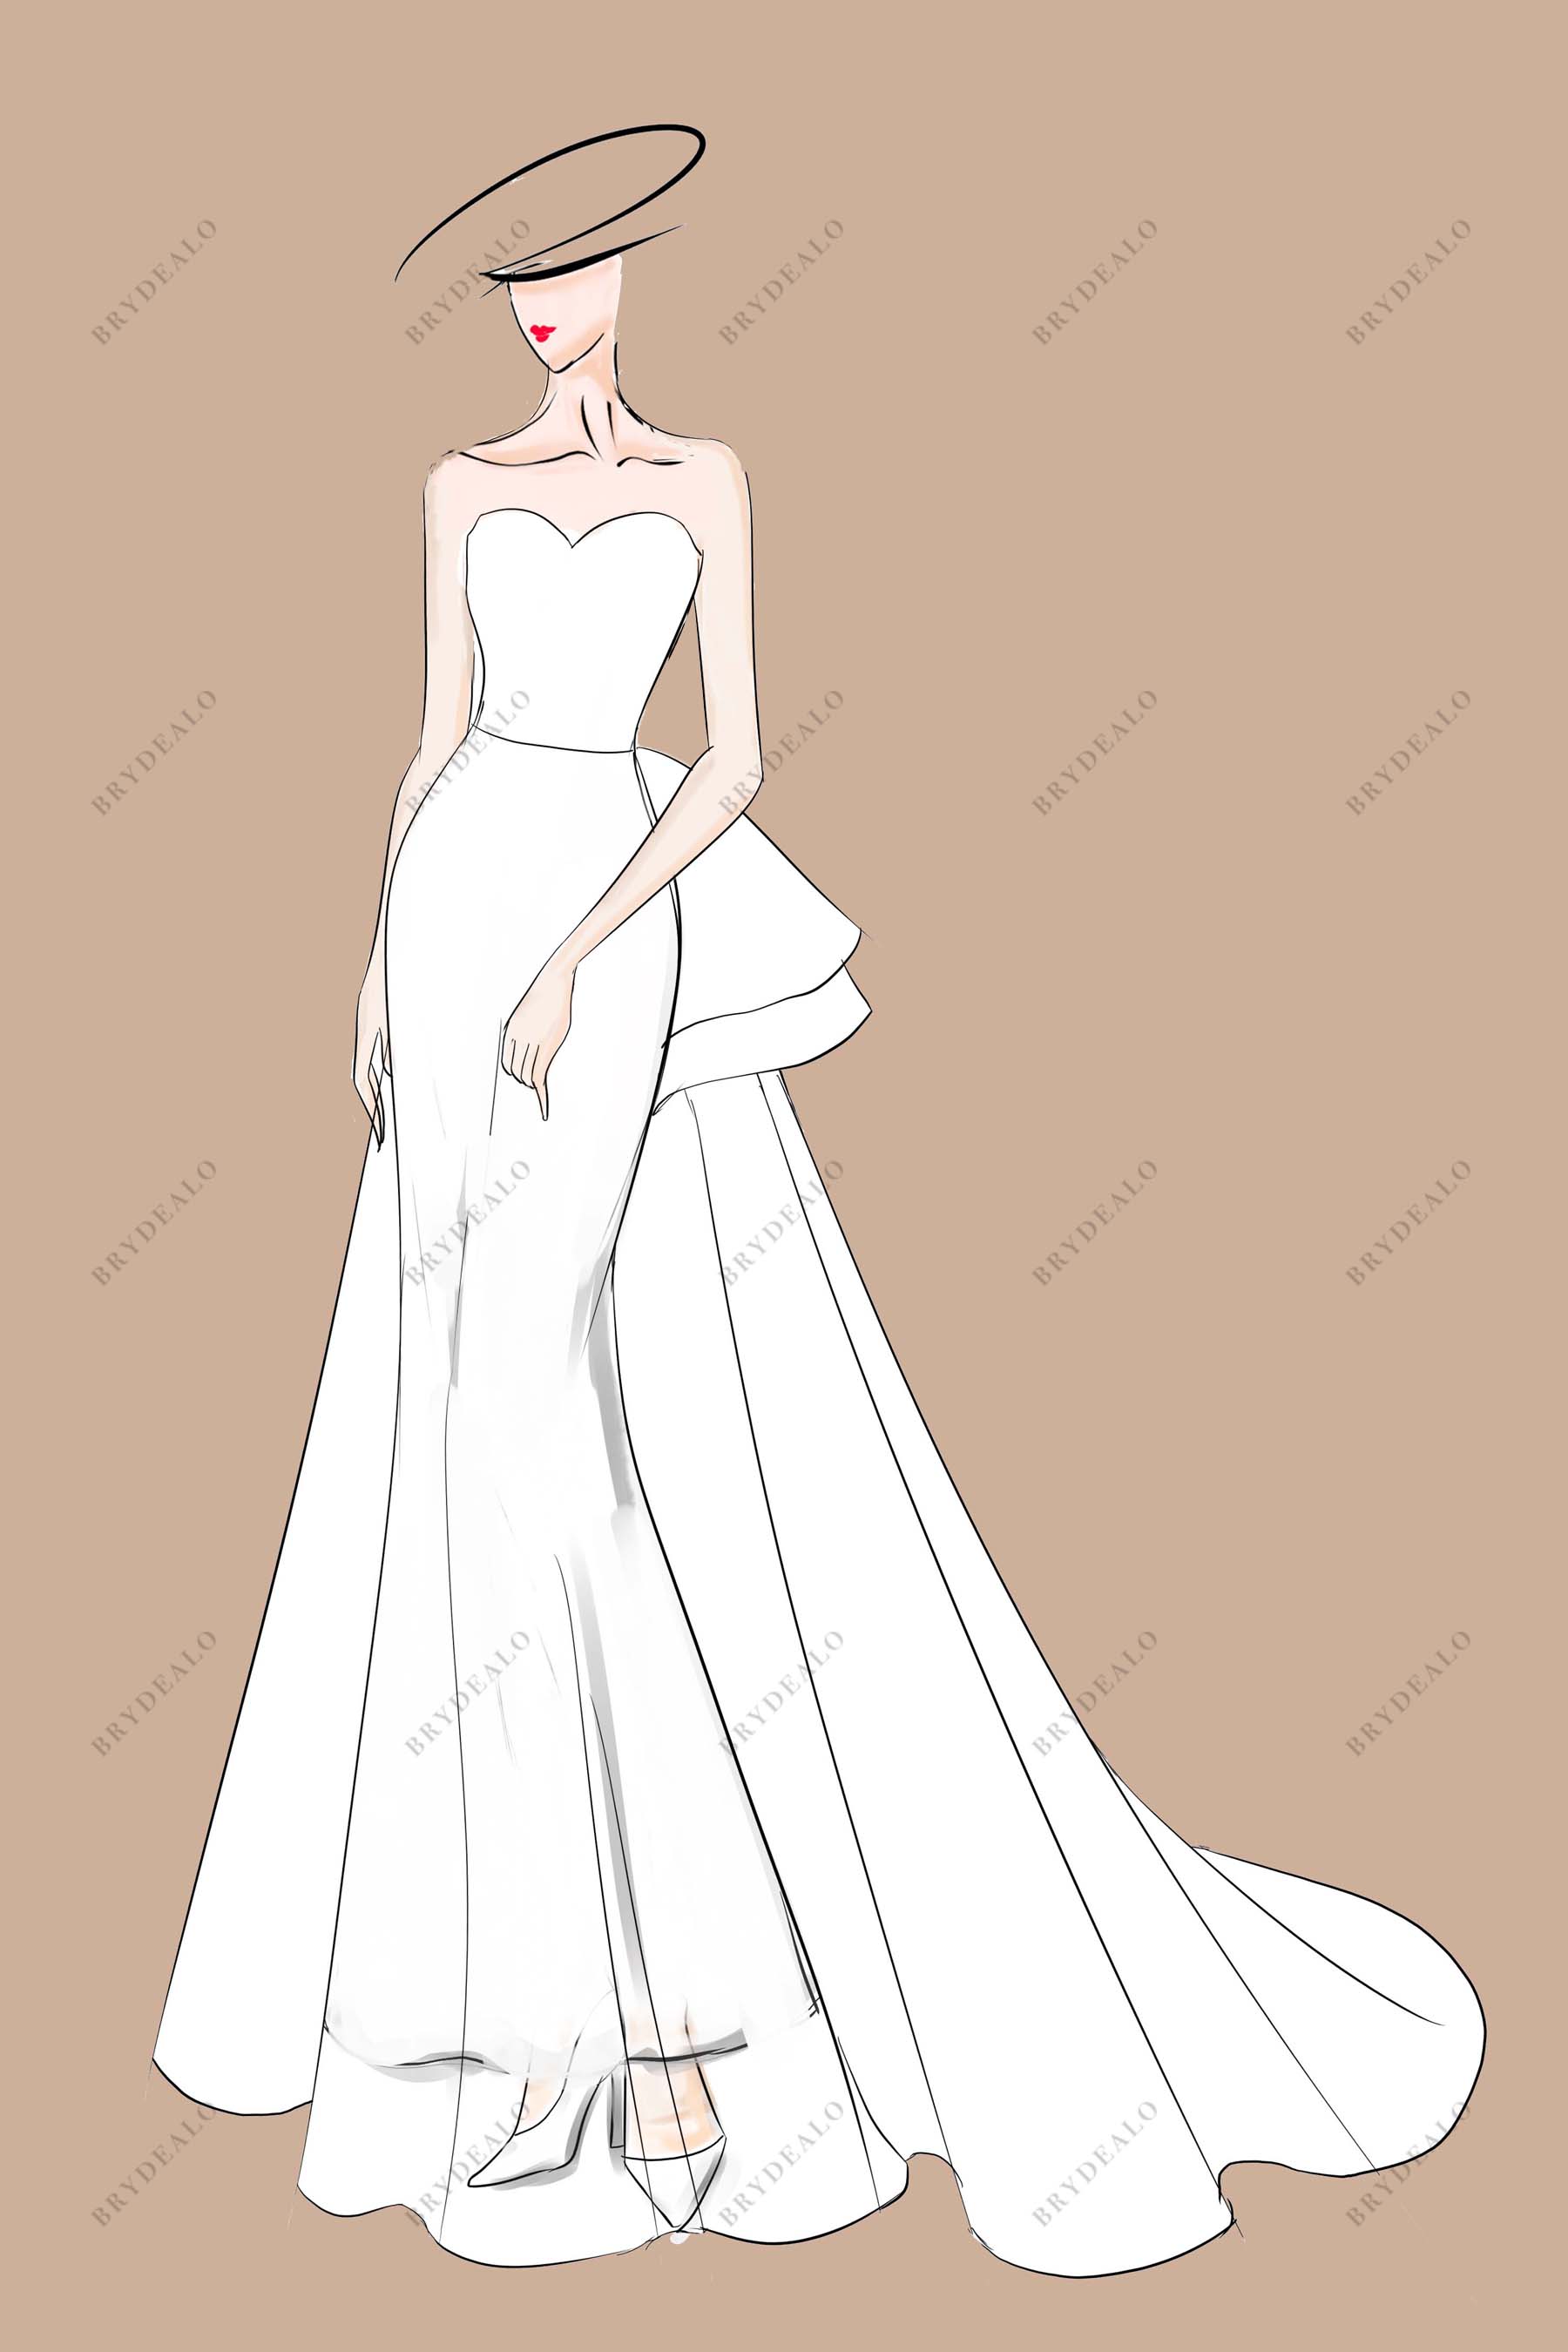 Ivory Strapless Mermaid Overskirt Wedding Dress Sketch